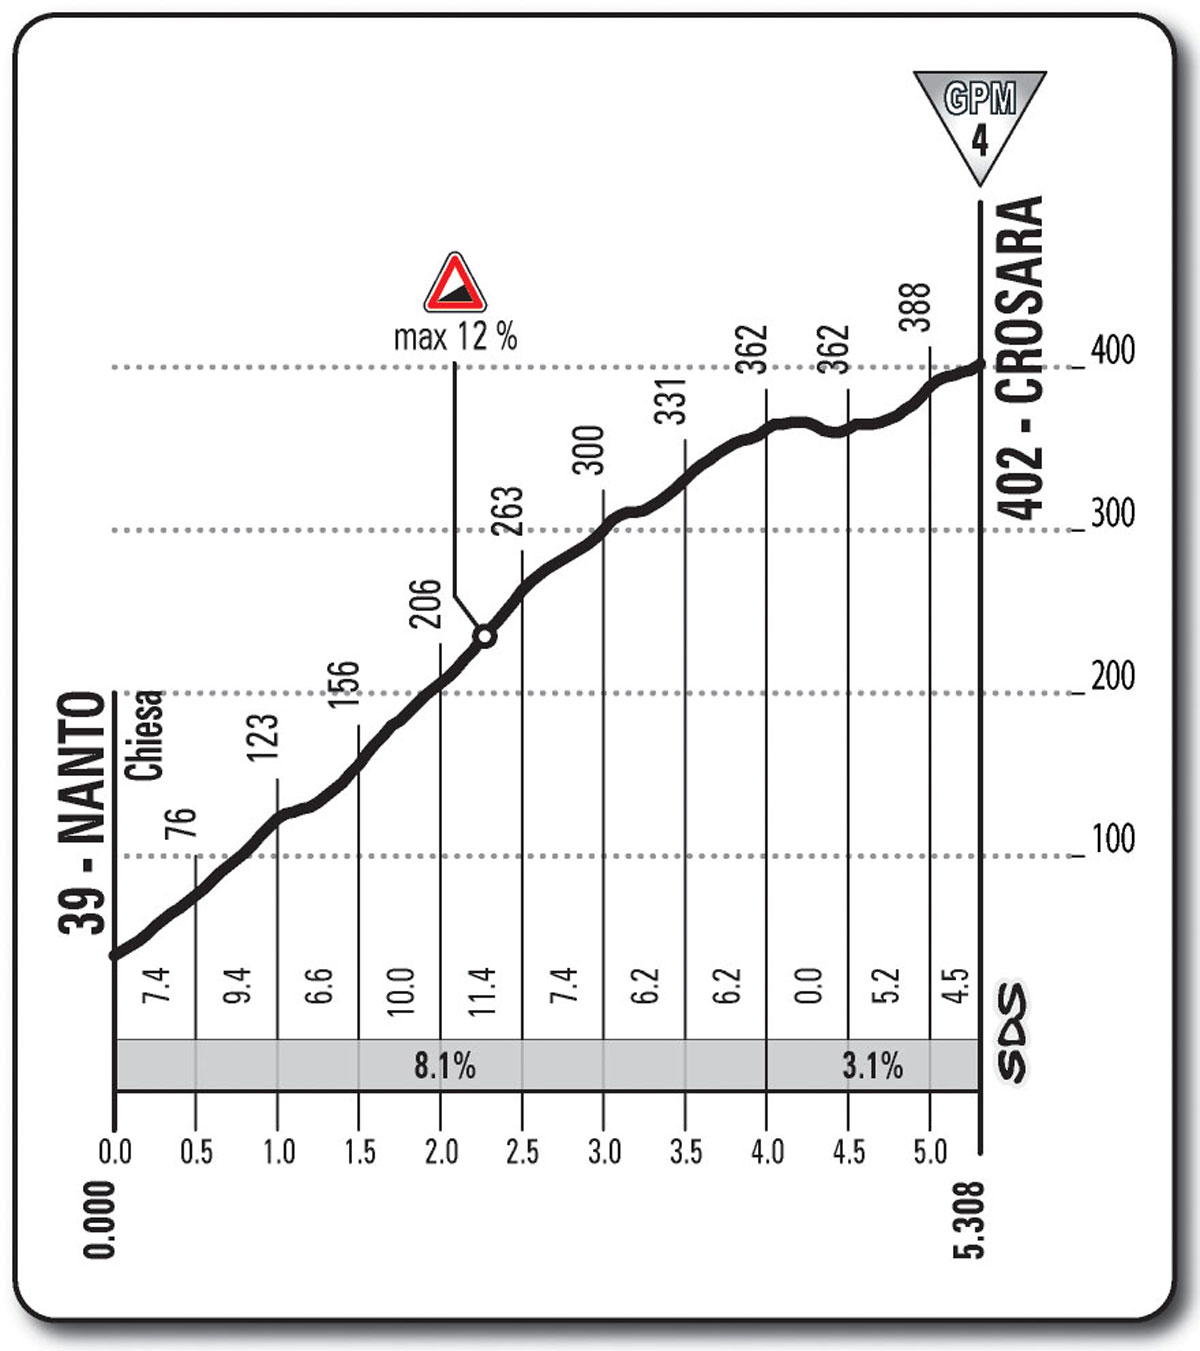 Giro d'Italia 2013 stage 17, Crosara climb